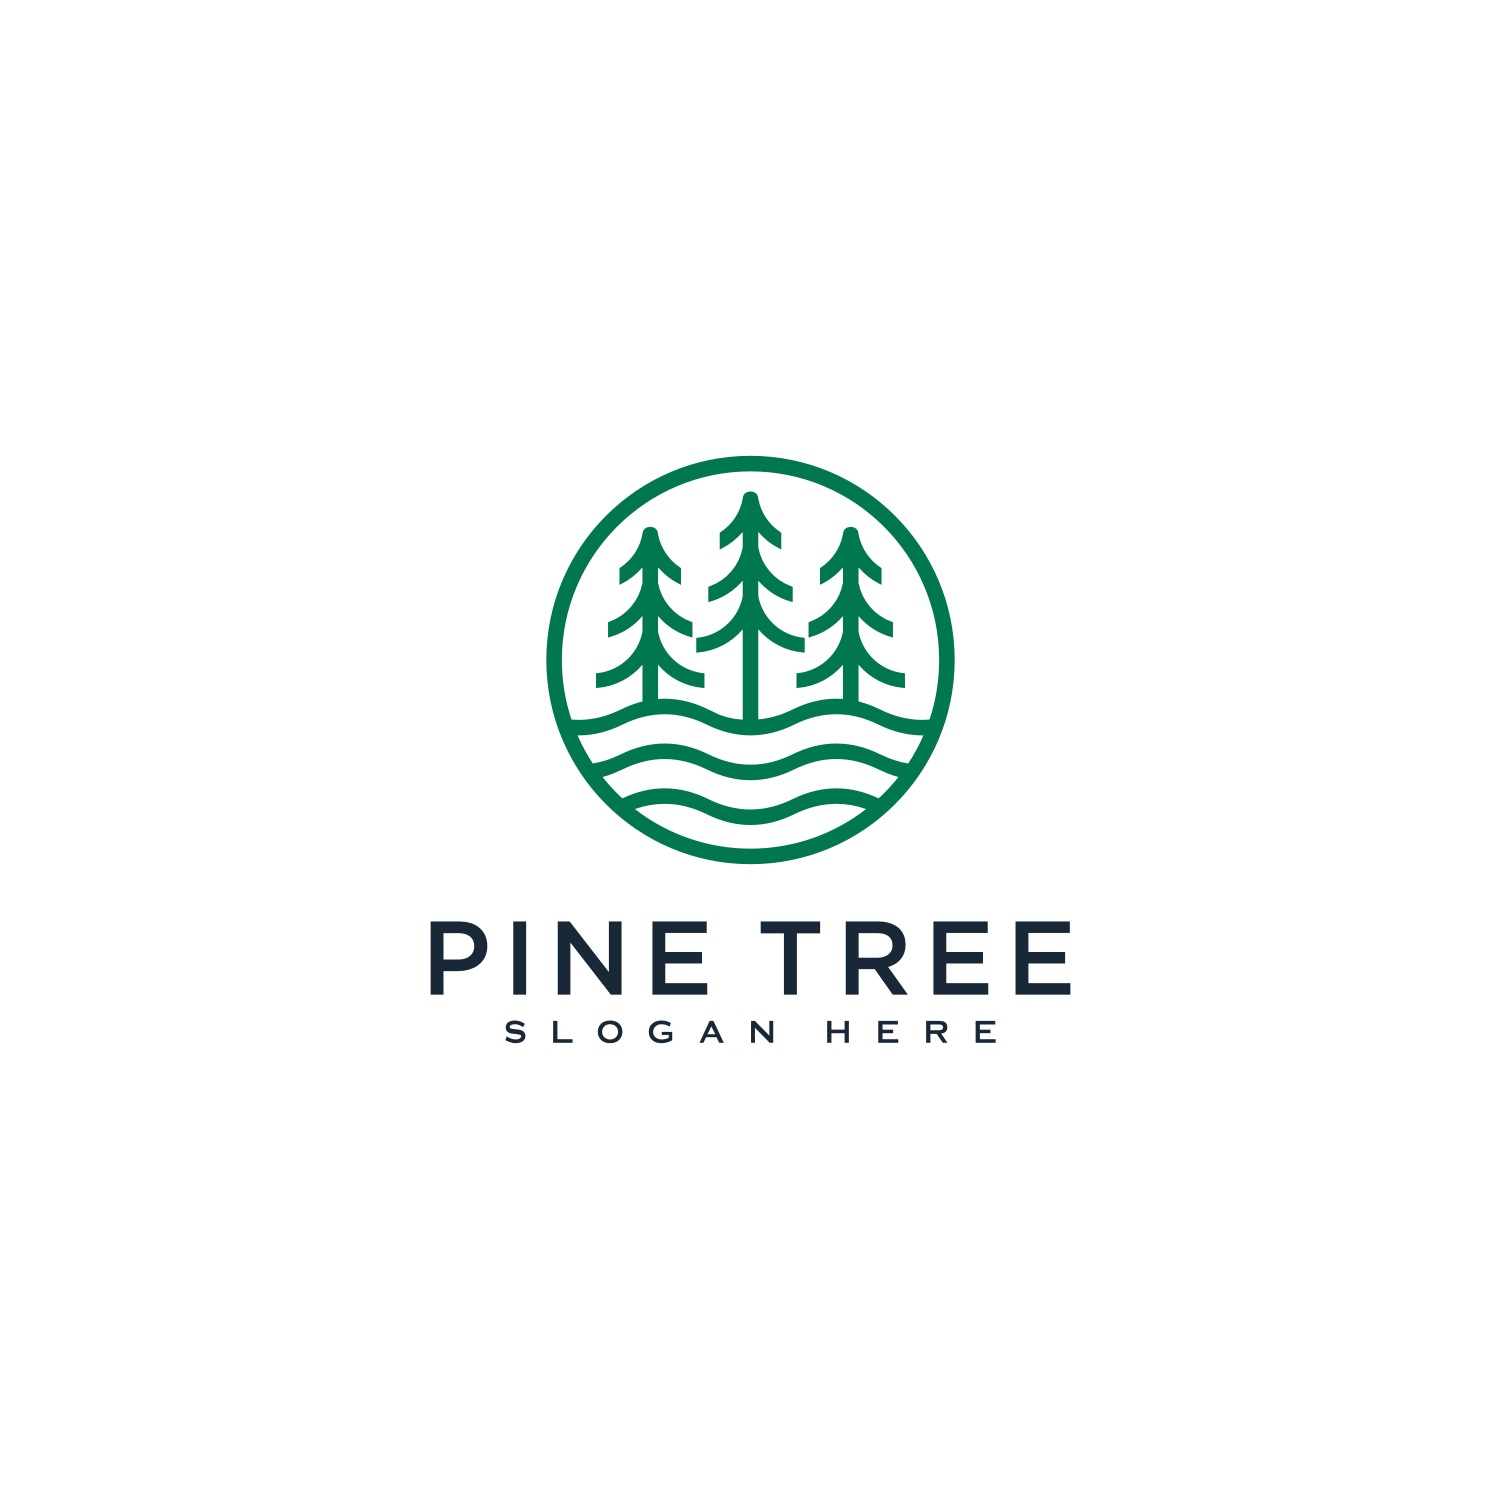 Pine Tree Beautiful Logo Vector Design Template Cover Image.